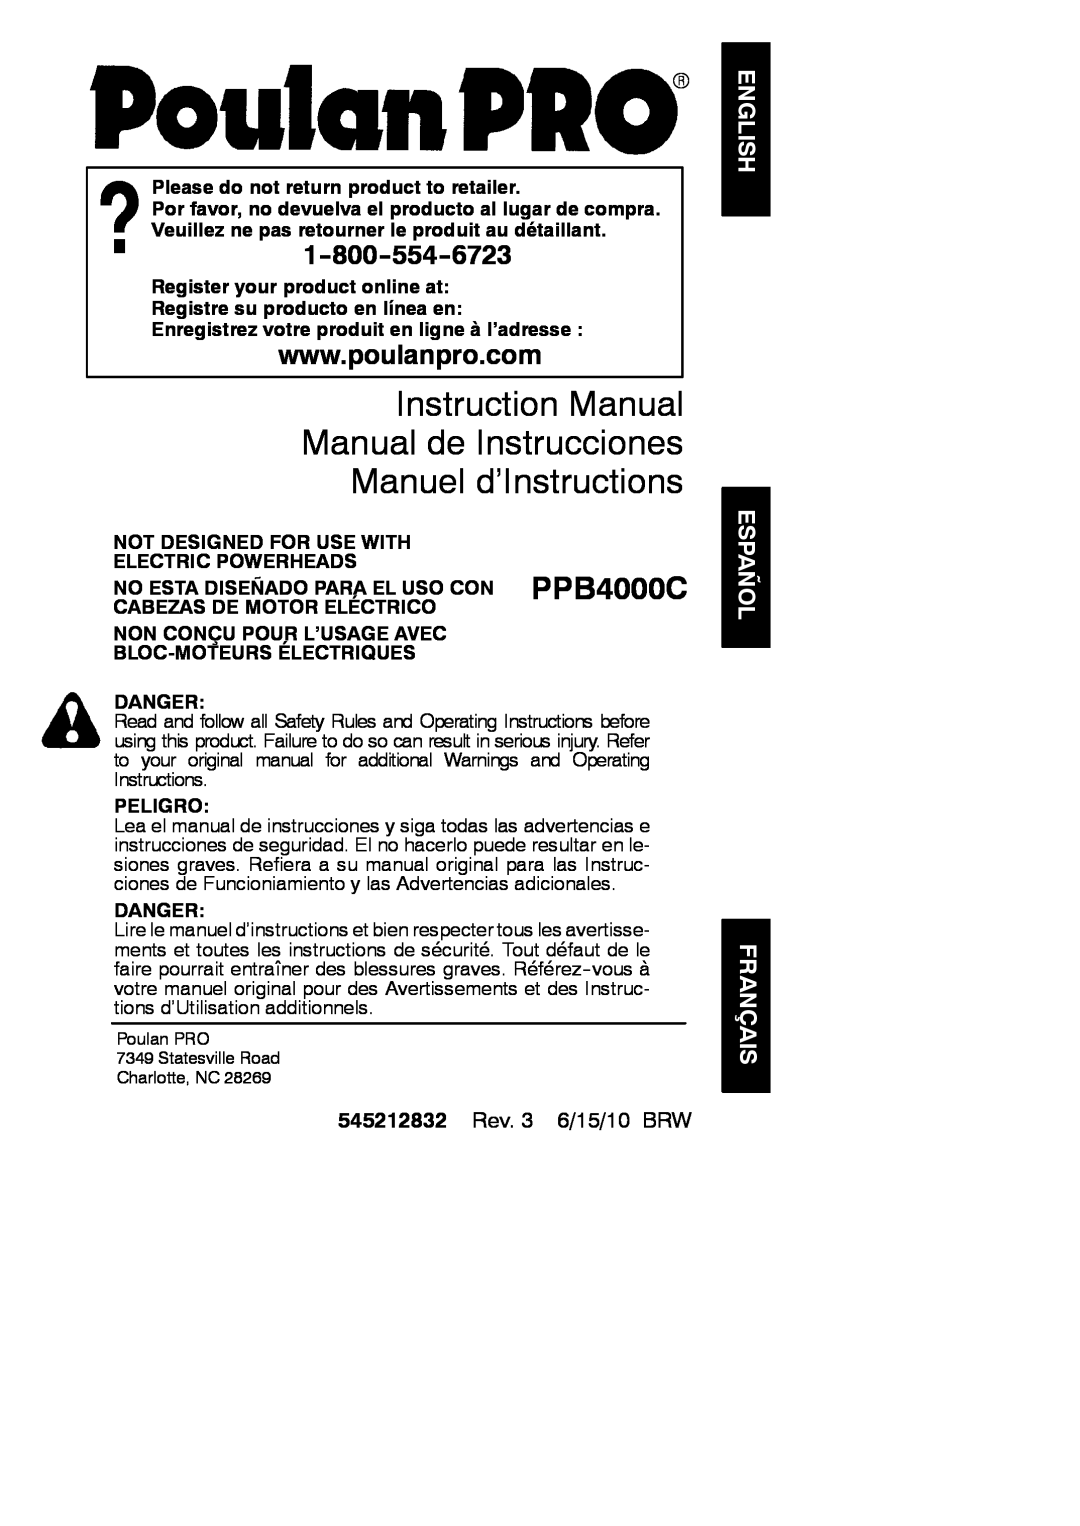 Poulan instruction manual Manuel d’Instructions, English Español Français, 545212832 Rev. 3 6/15/10 BRW, Danger 